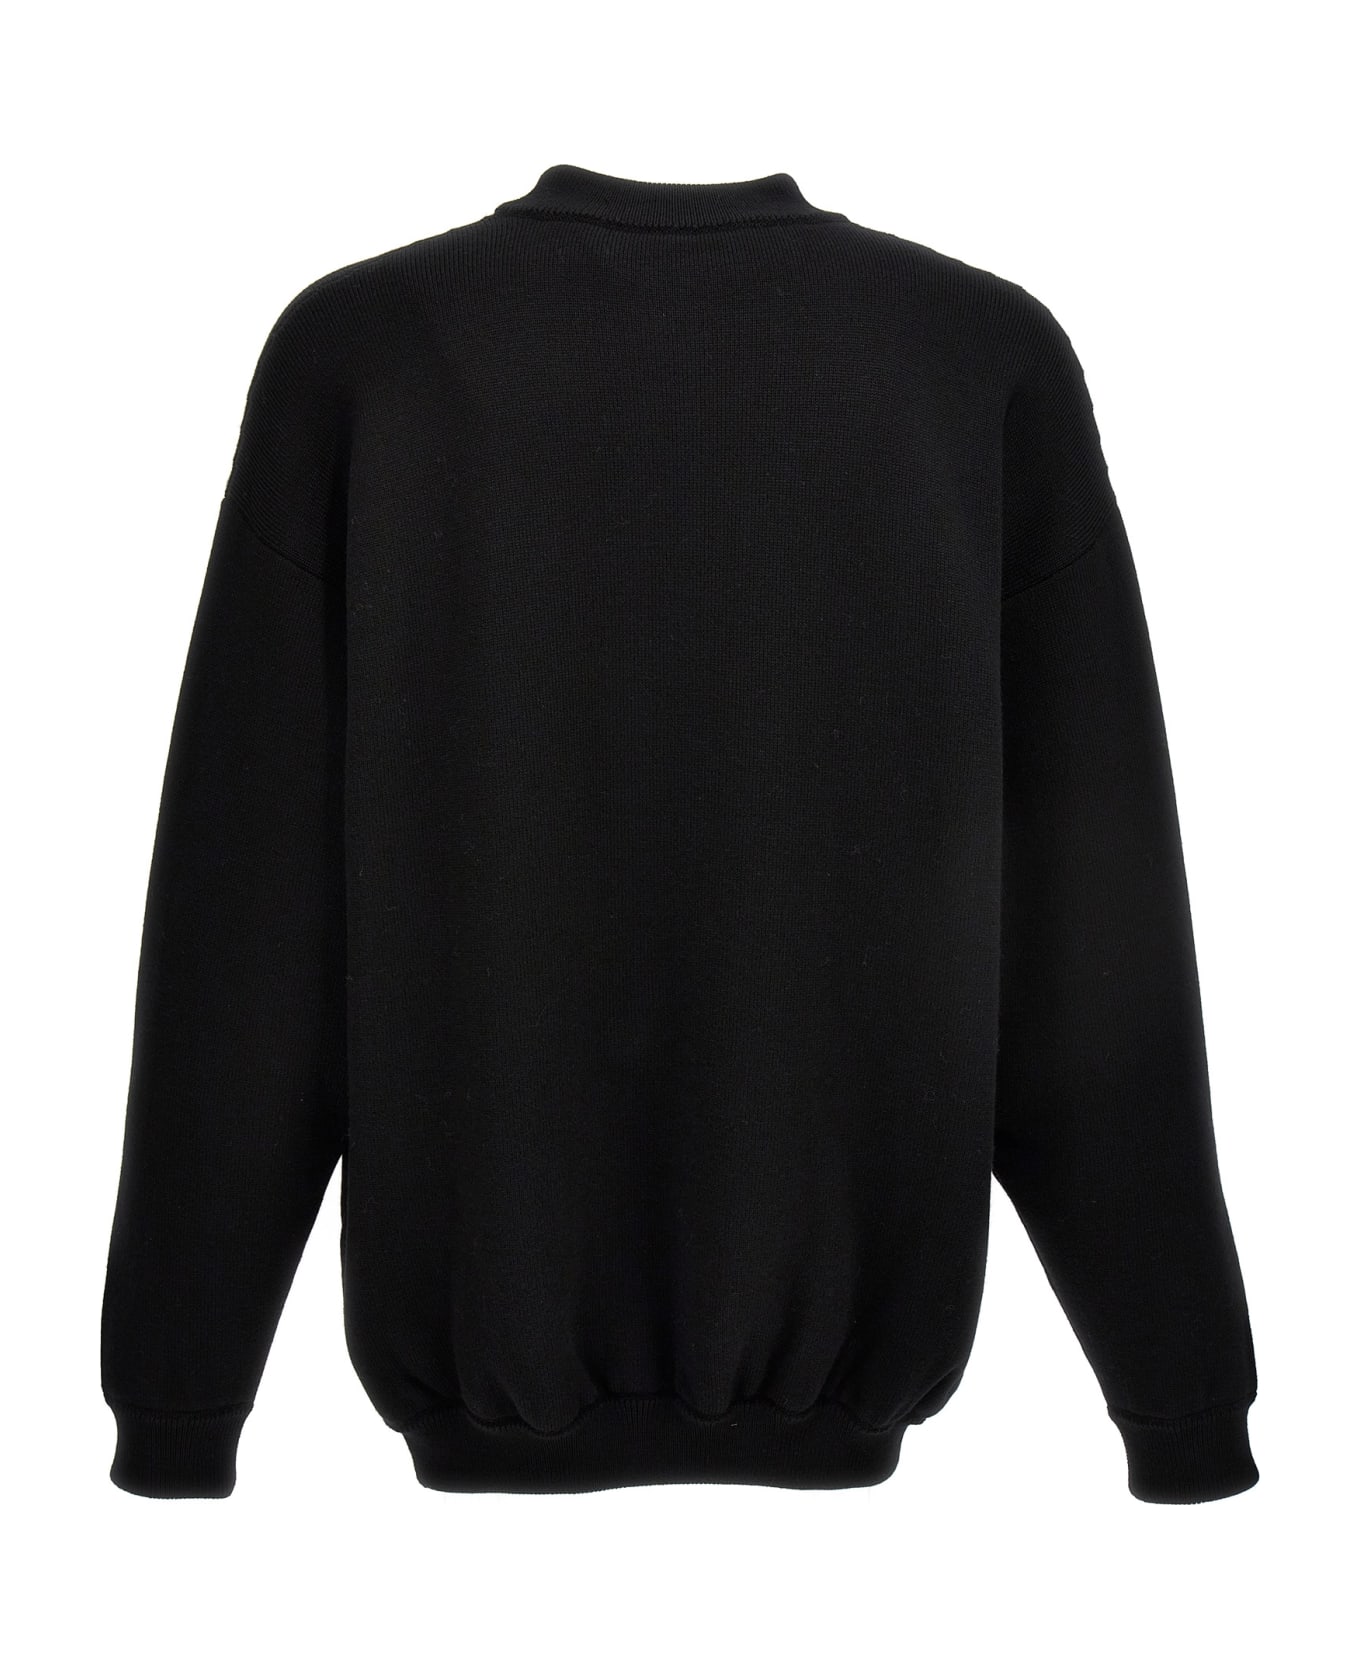 VETEMENTS Paris Sweater - Black  